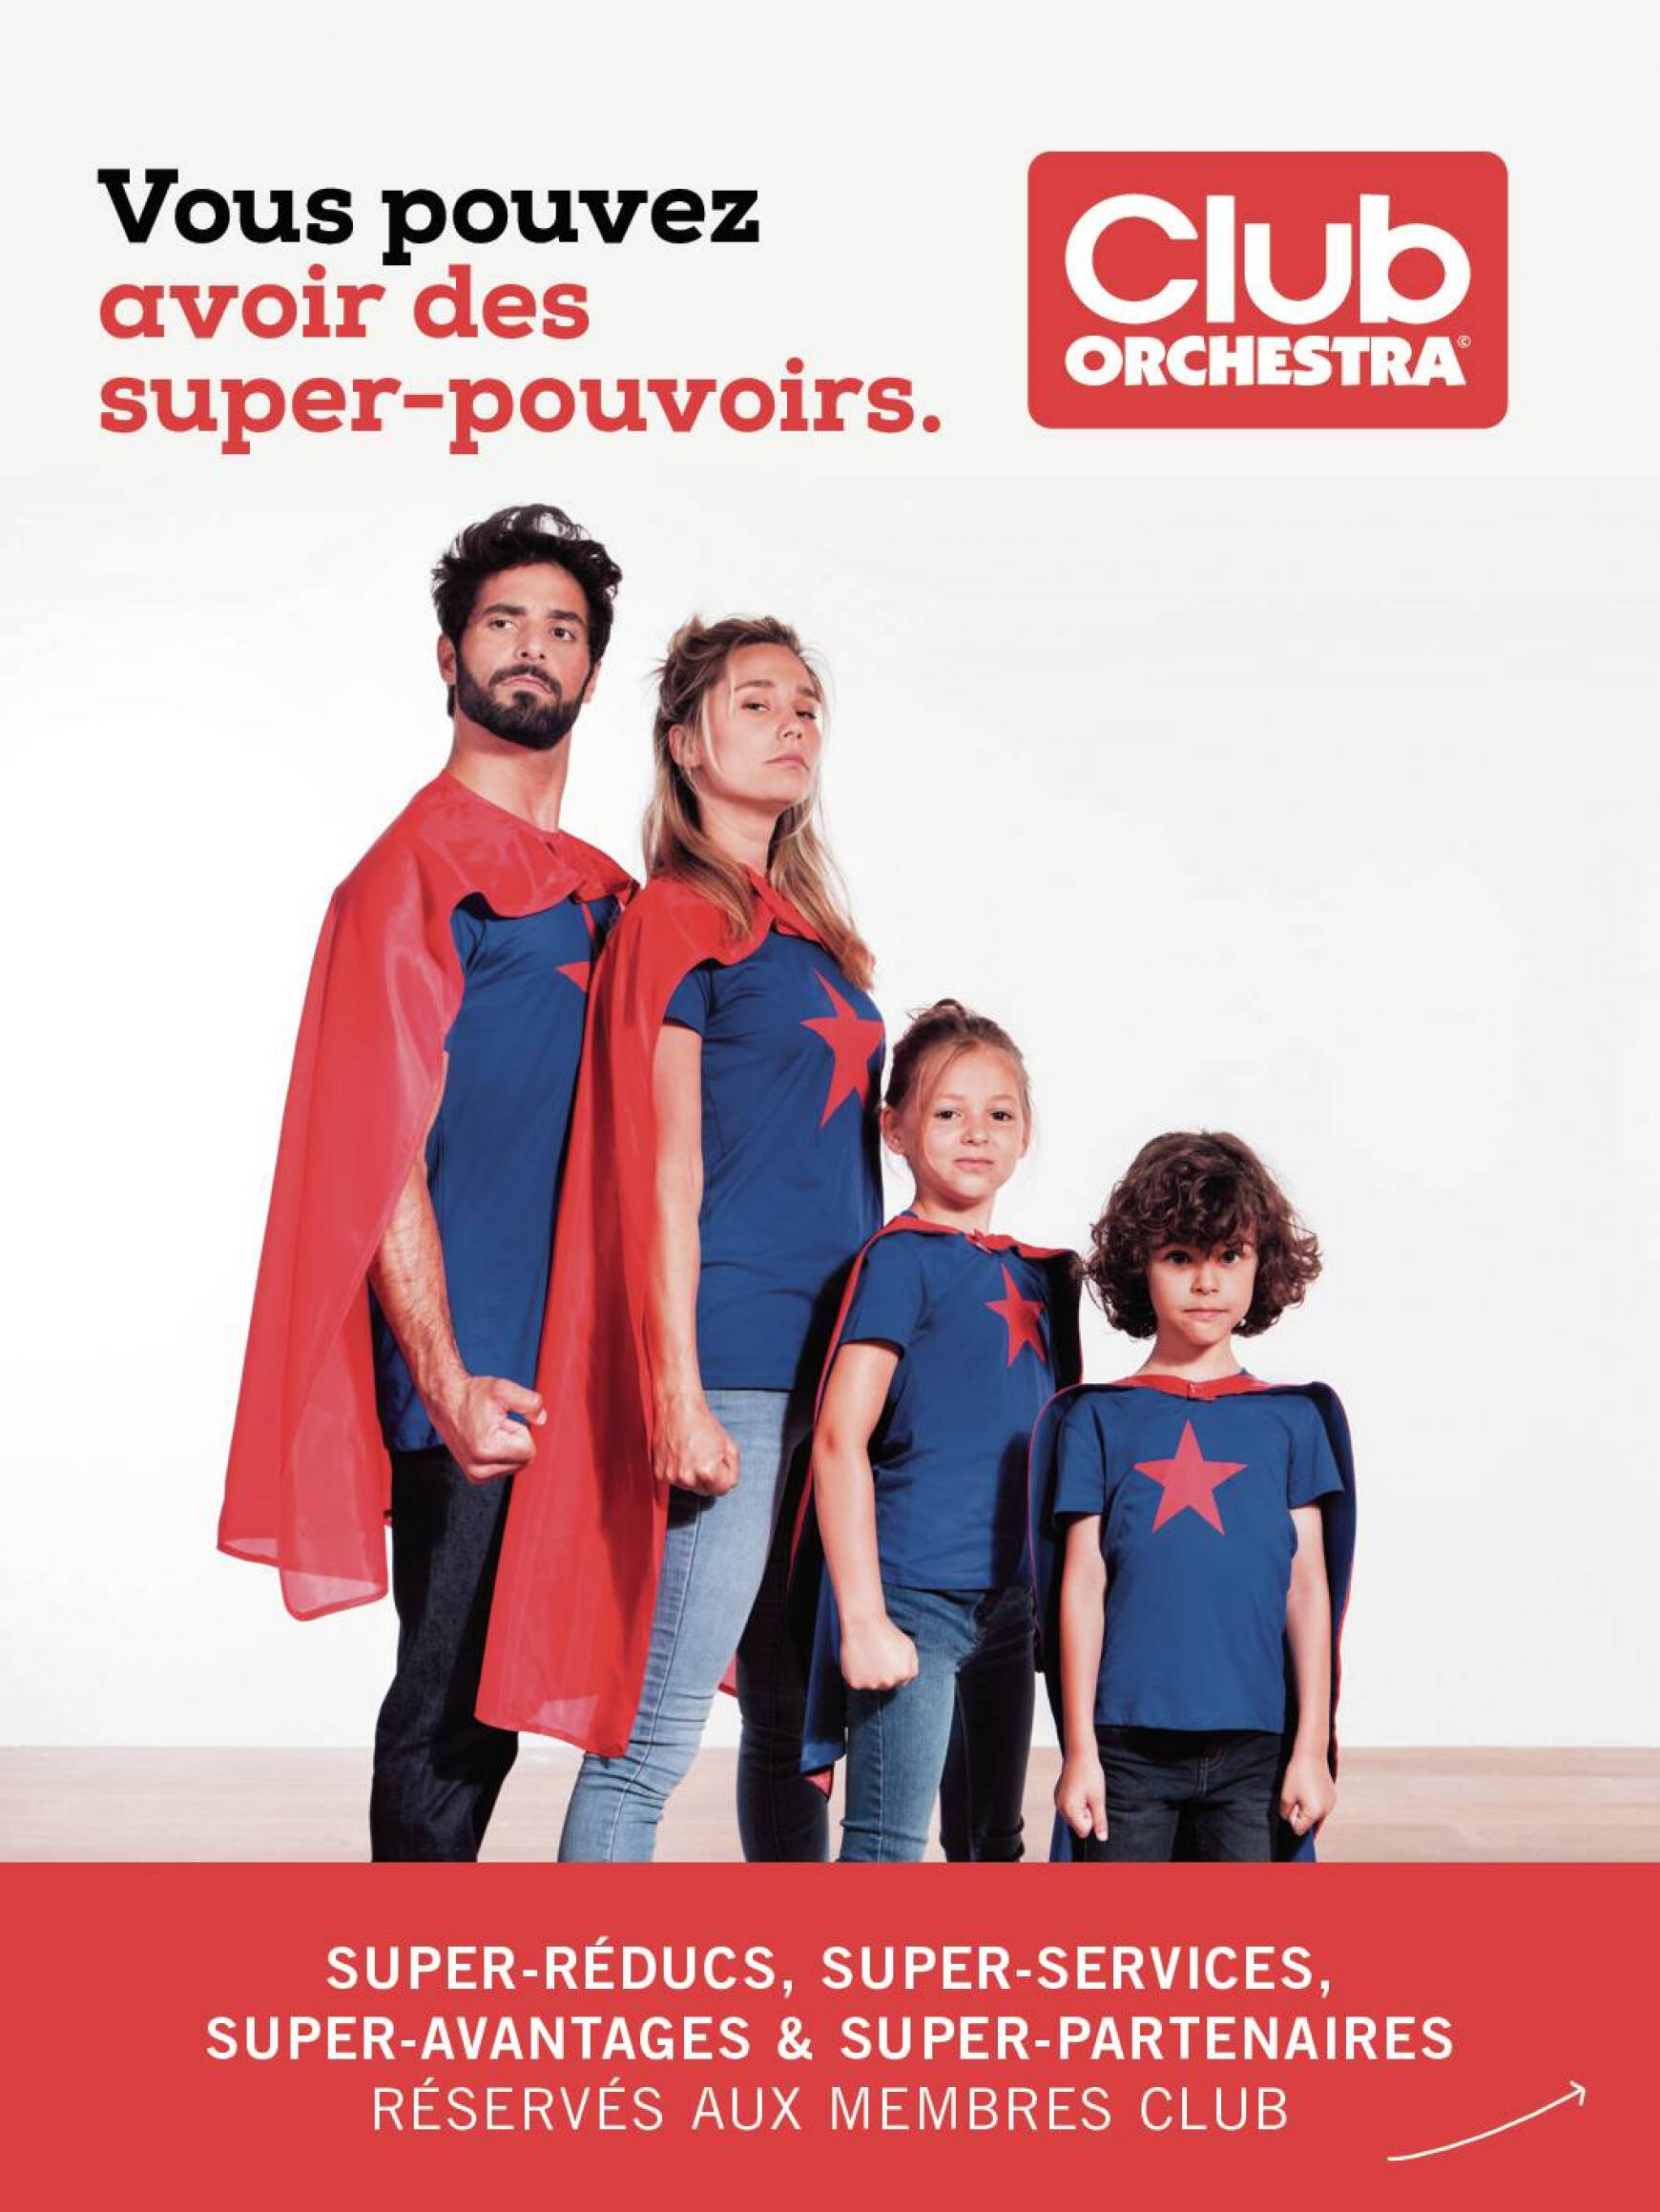 orchestra - Catalogue Orchestra de du samedi 01.04. - page: 4